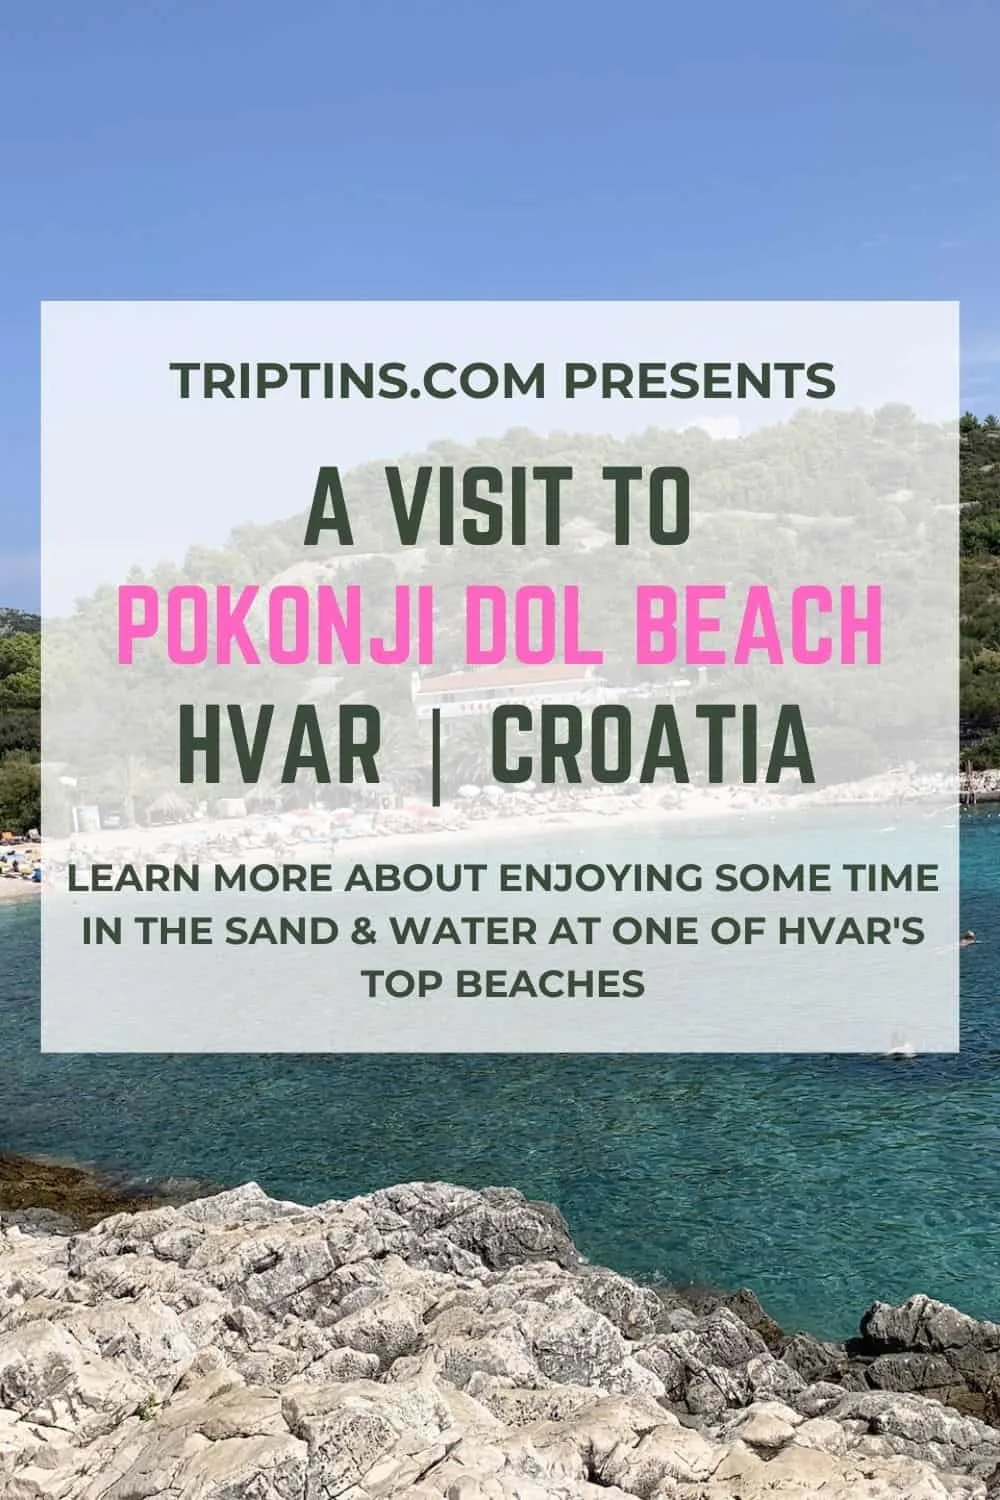 Pokonji Dol Beach Hvar Croatia